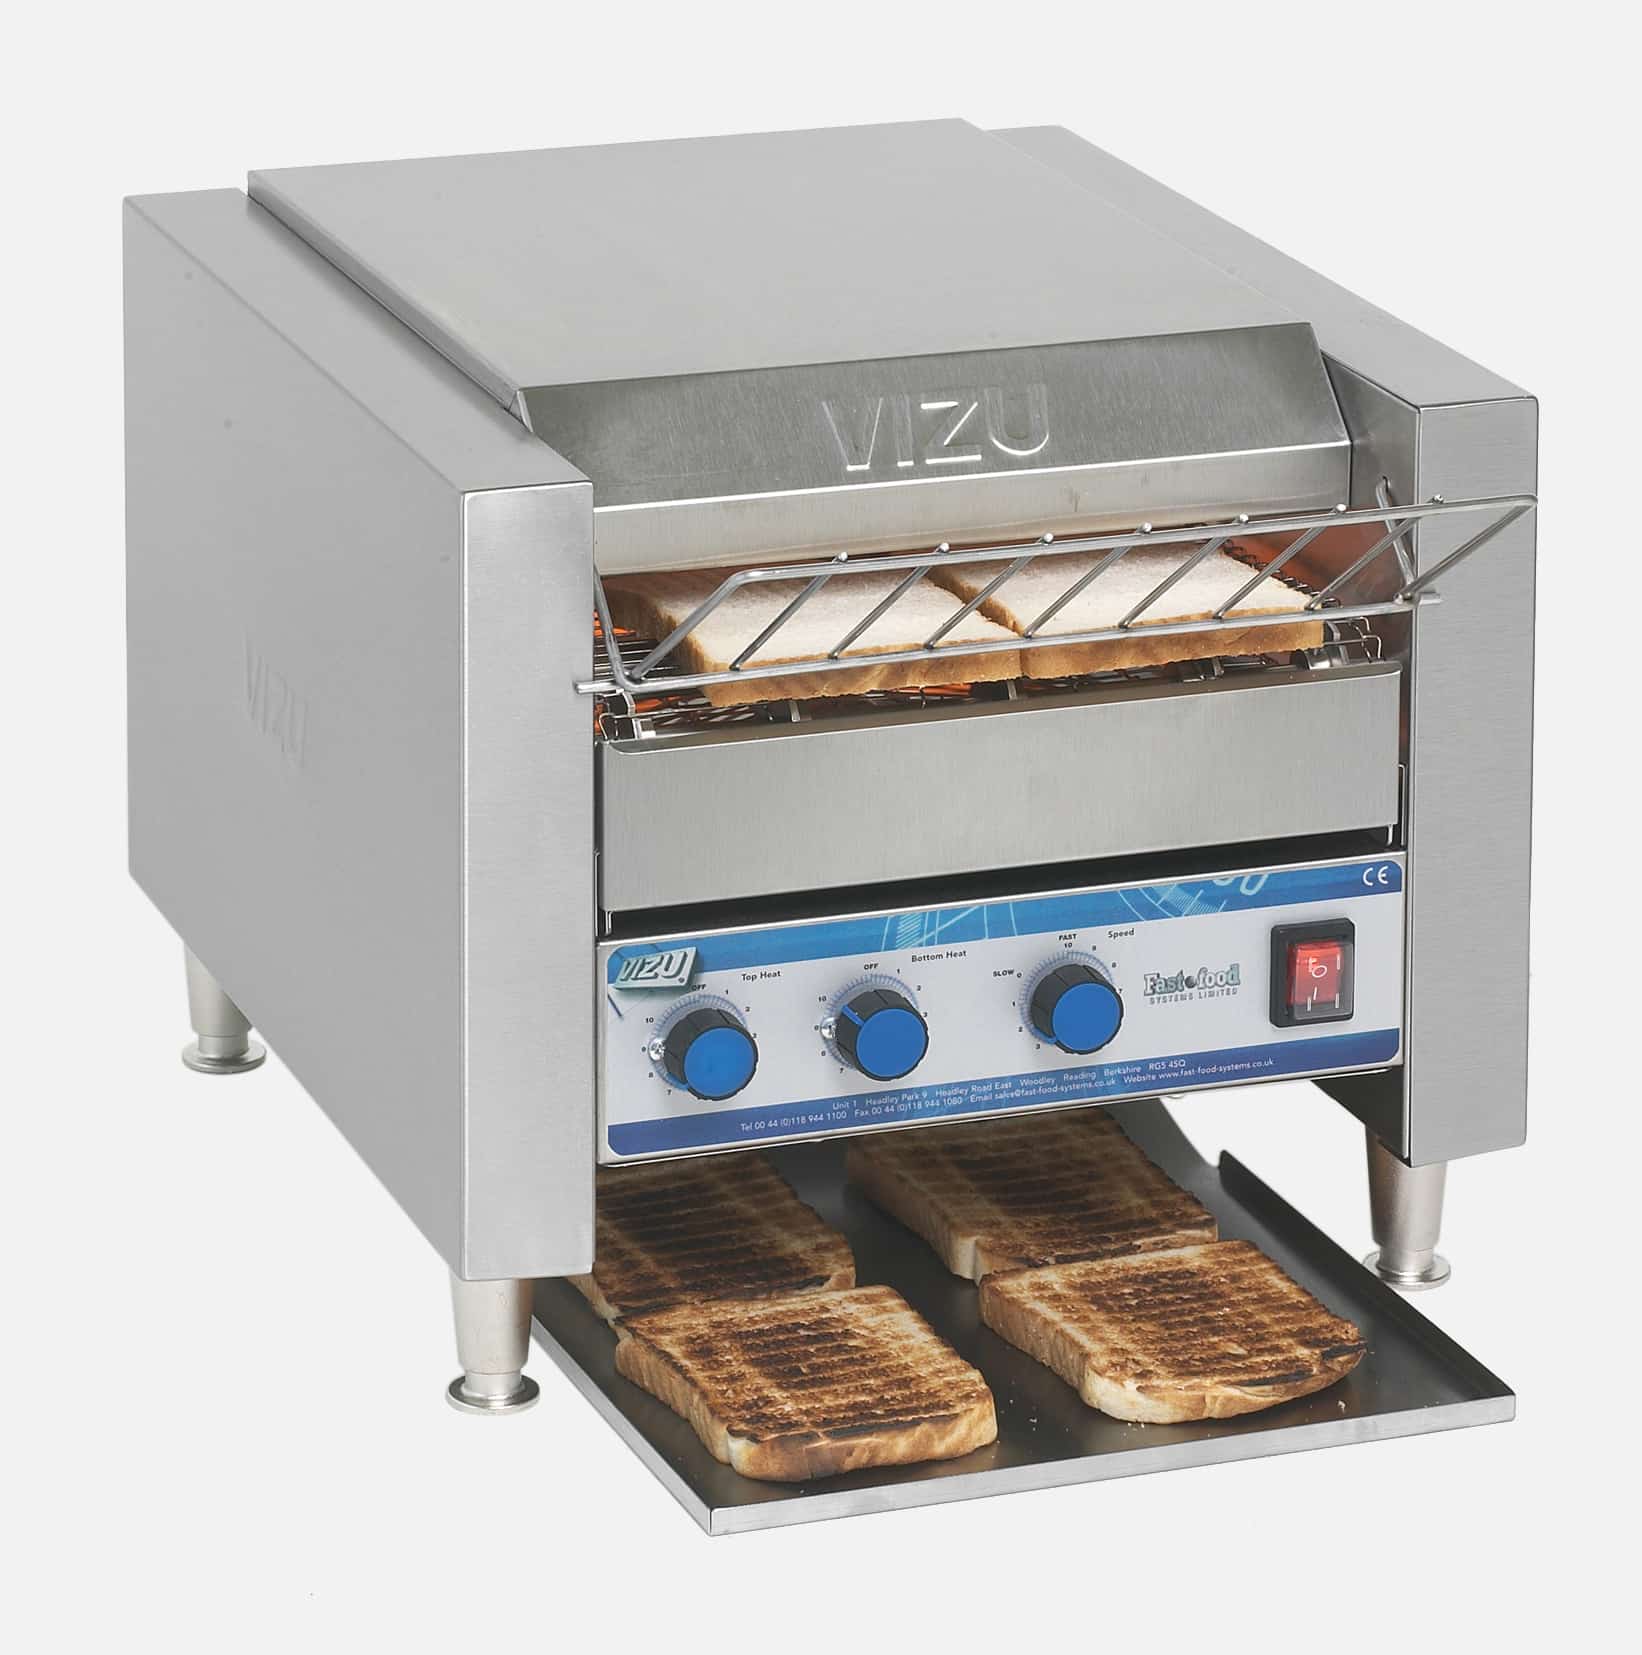 Vizu Bread Toaster